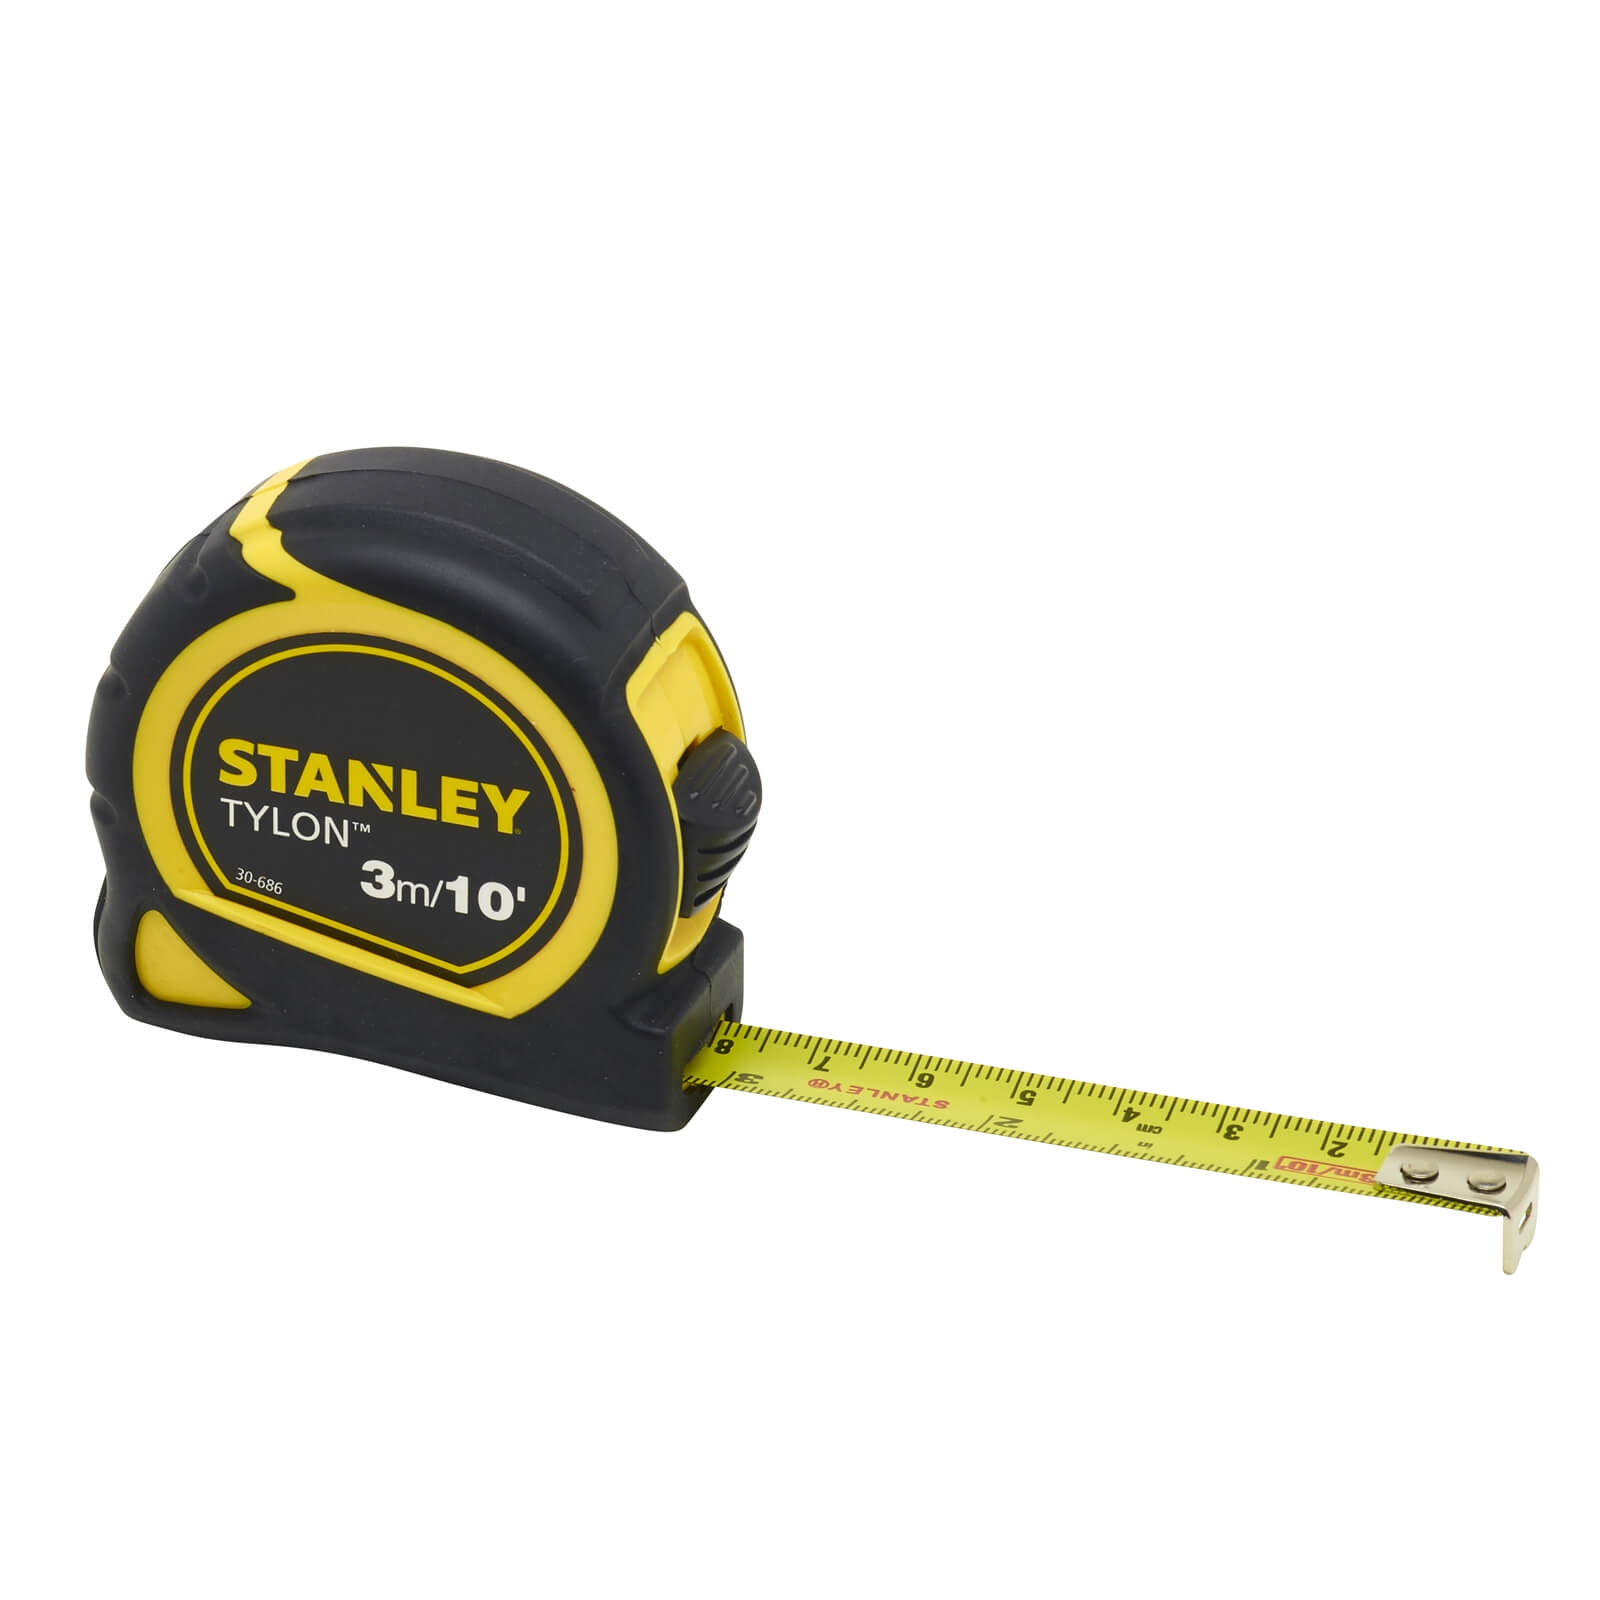 Stanley Tylon 3m/10' Tape Measure